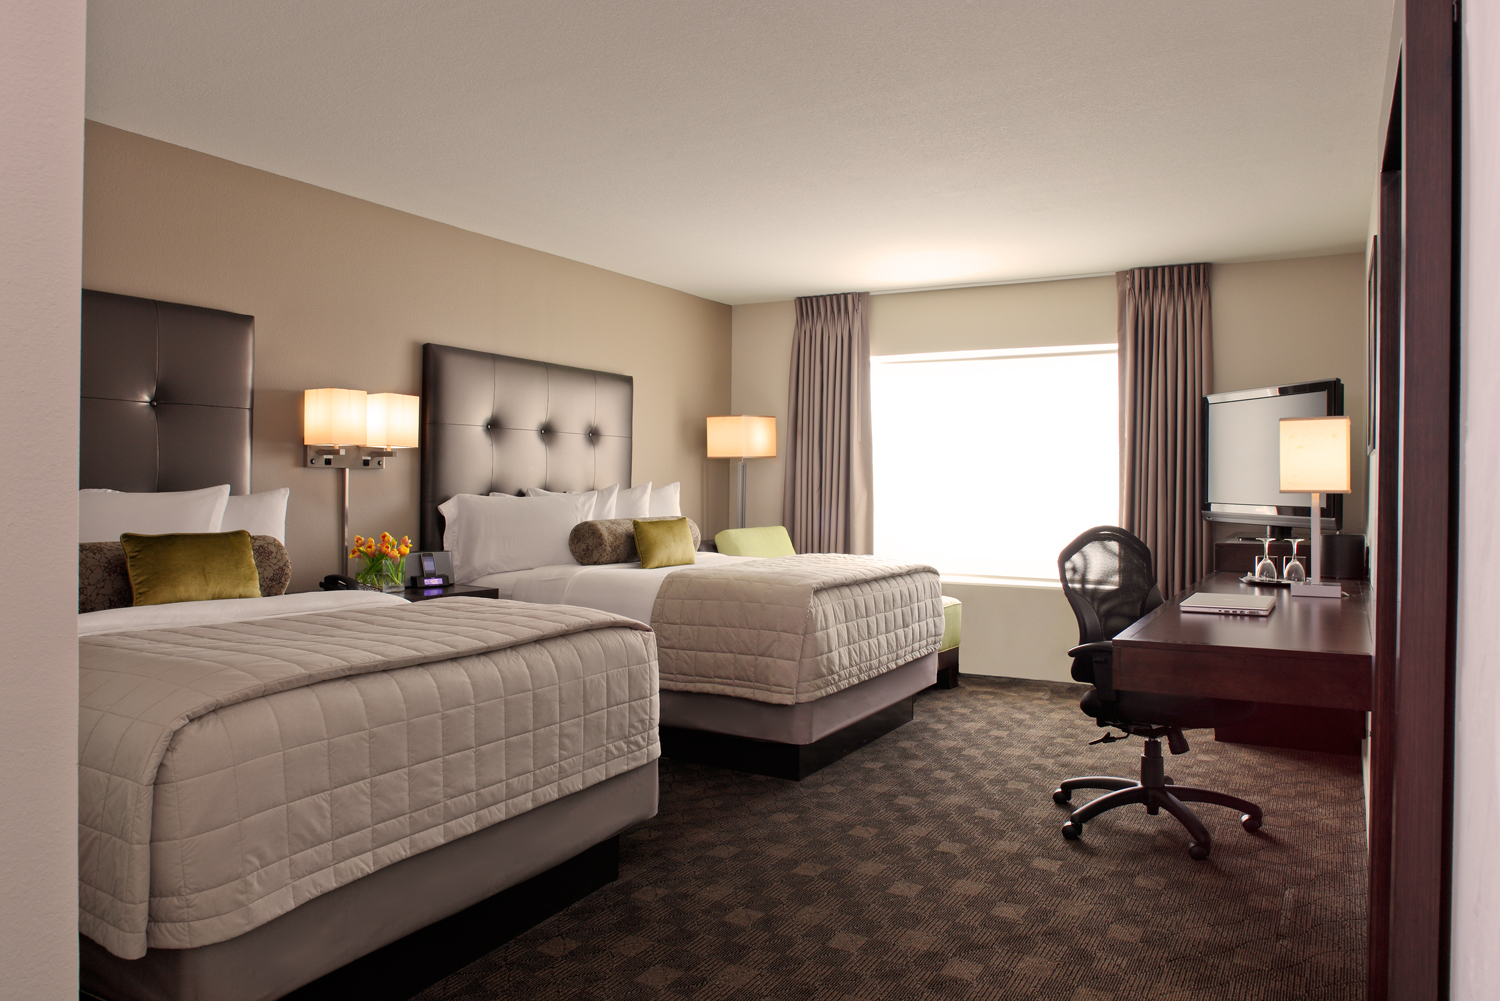 Avia Hotel - Houston, TX: Bed Styling